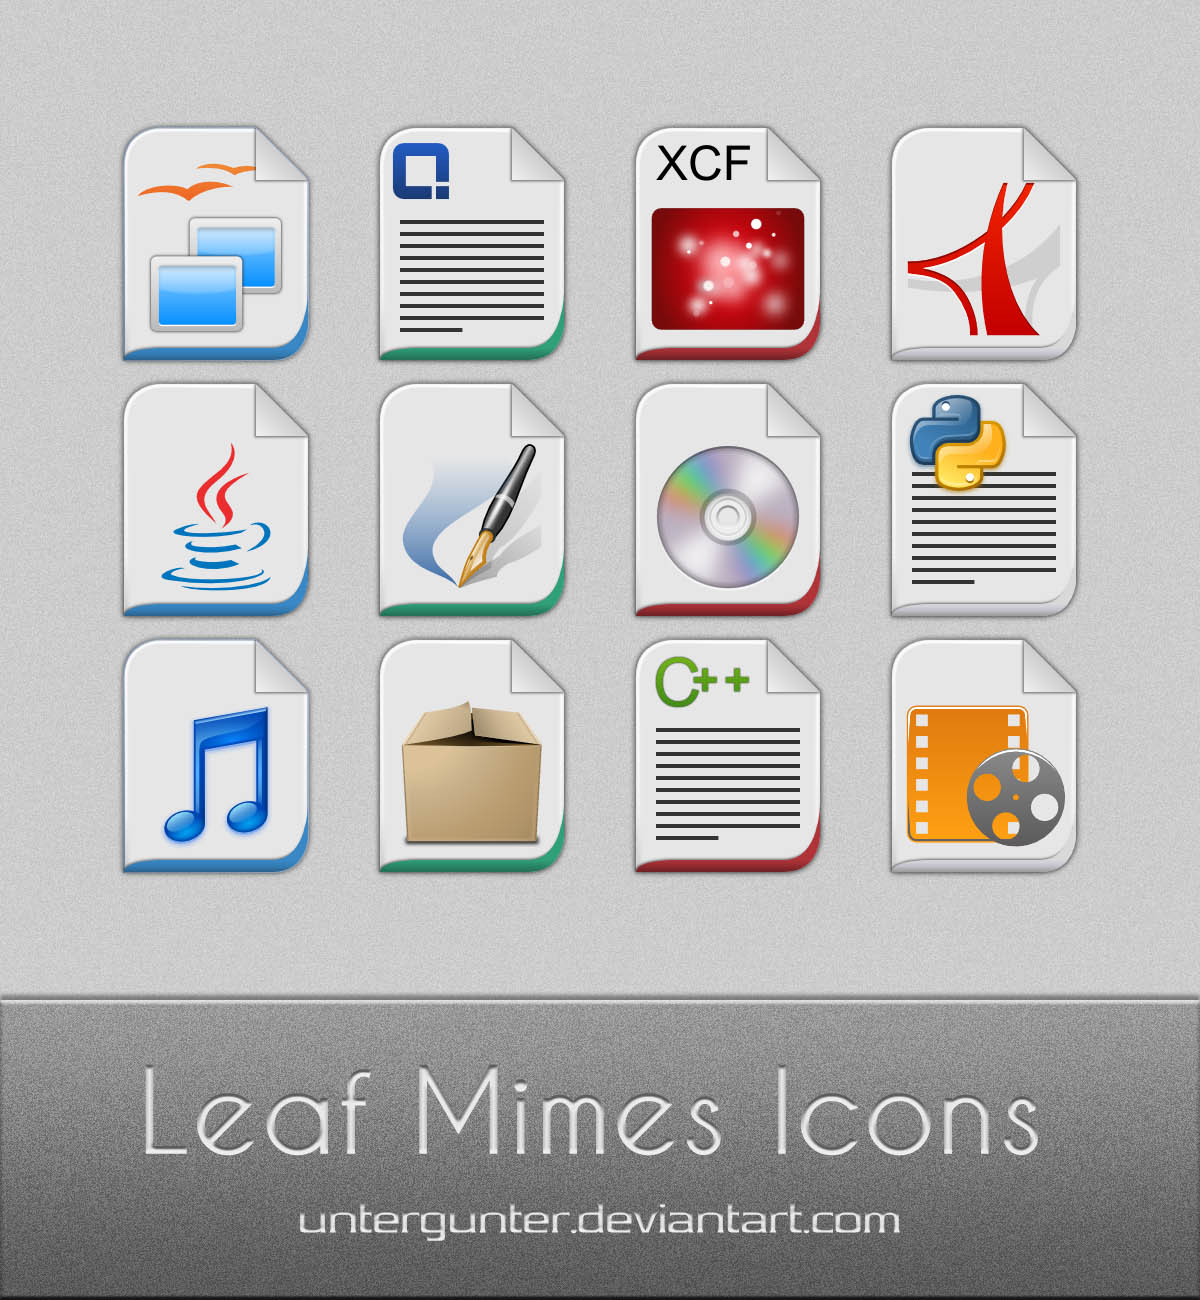 Leaf Mimes Icons